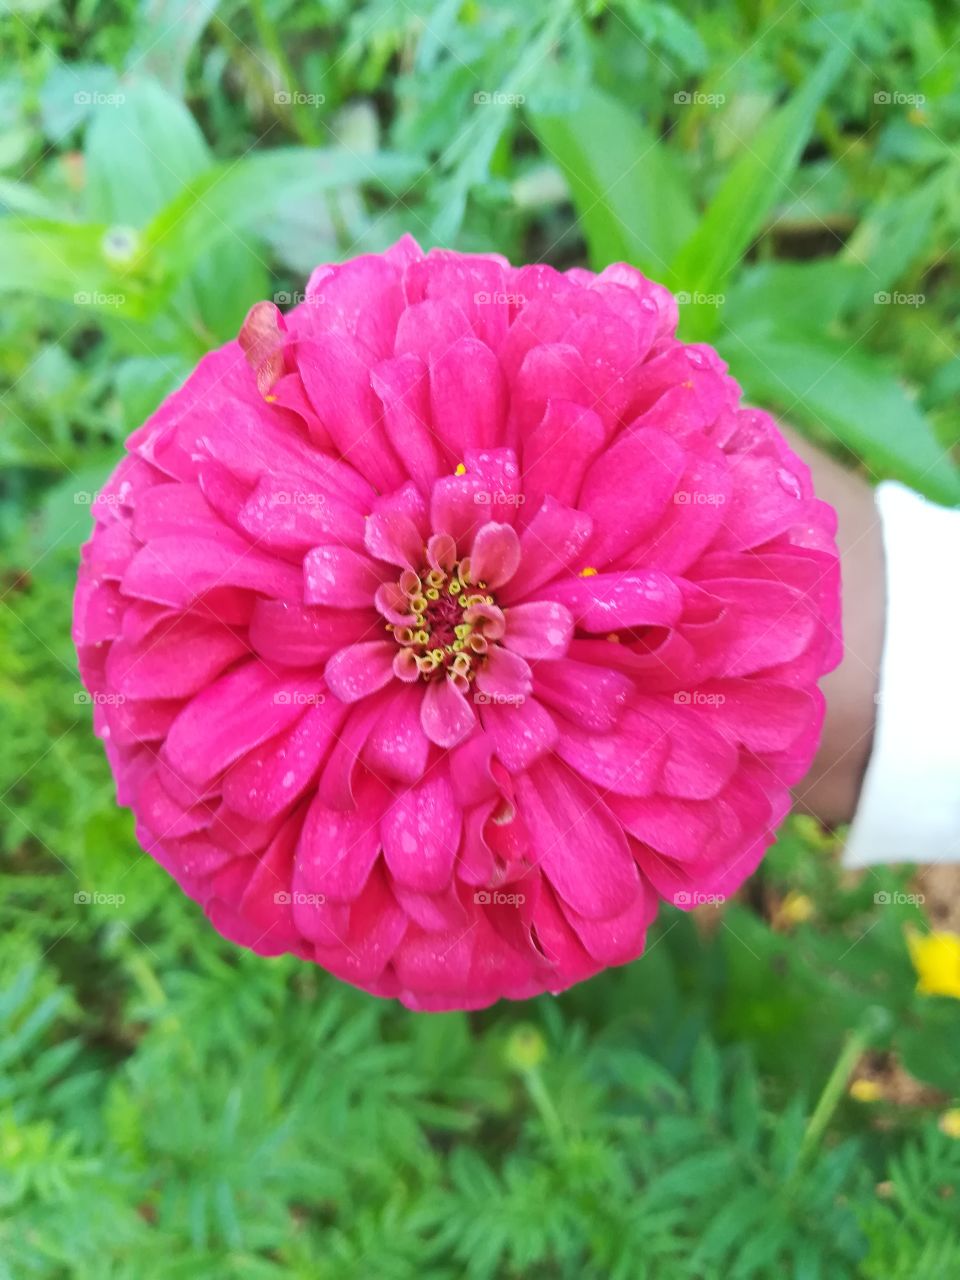 one flower